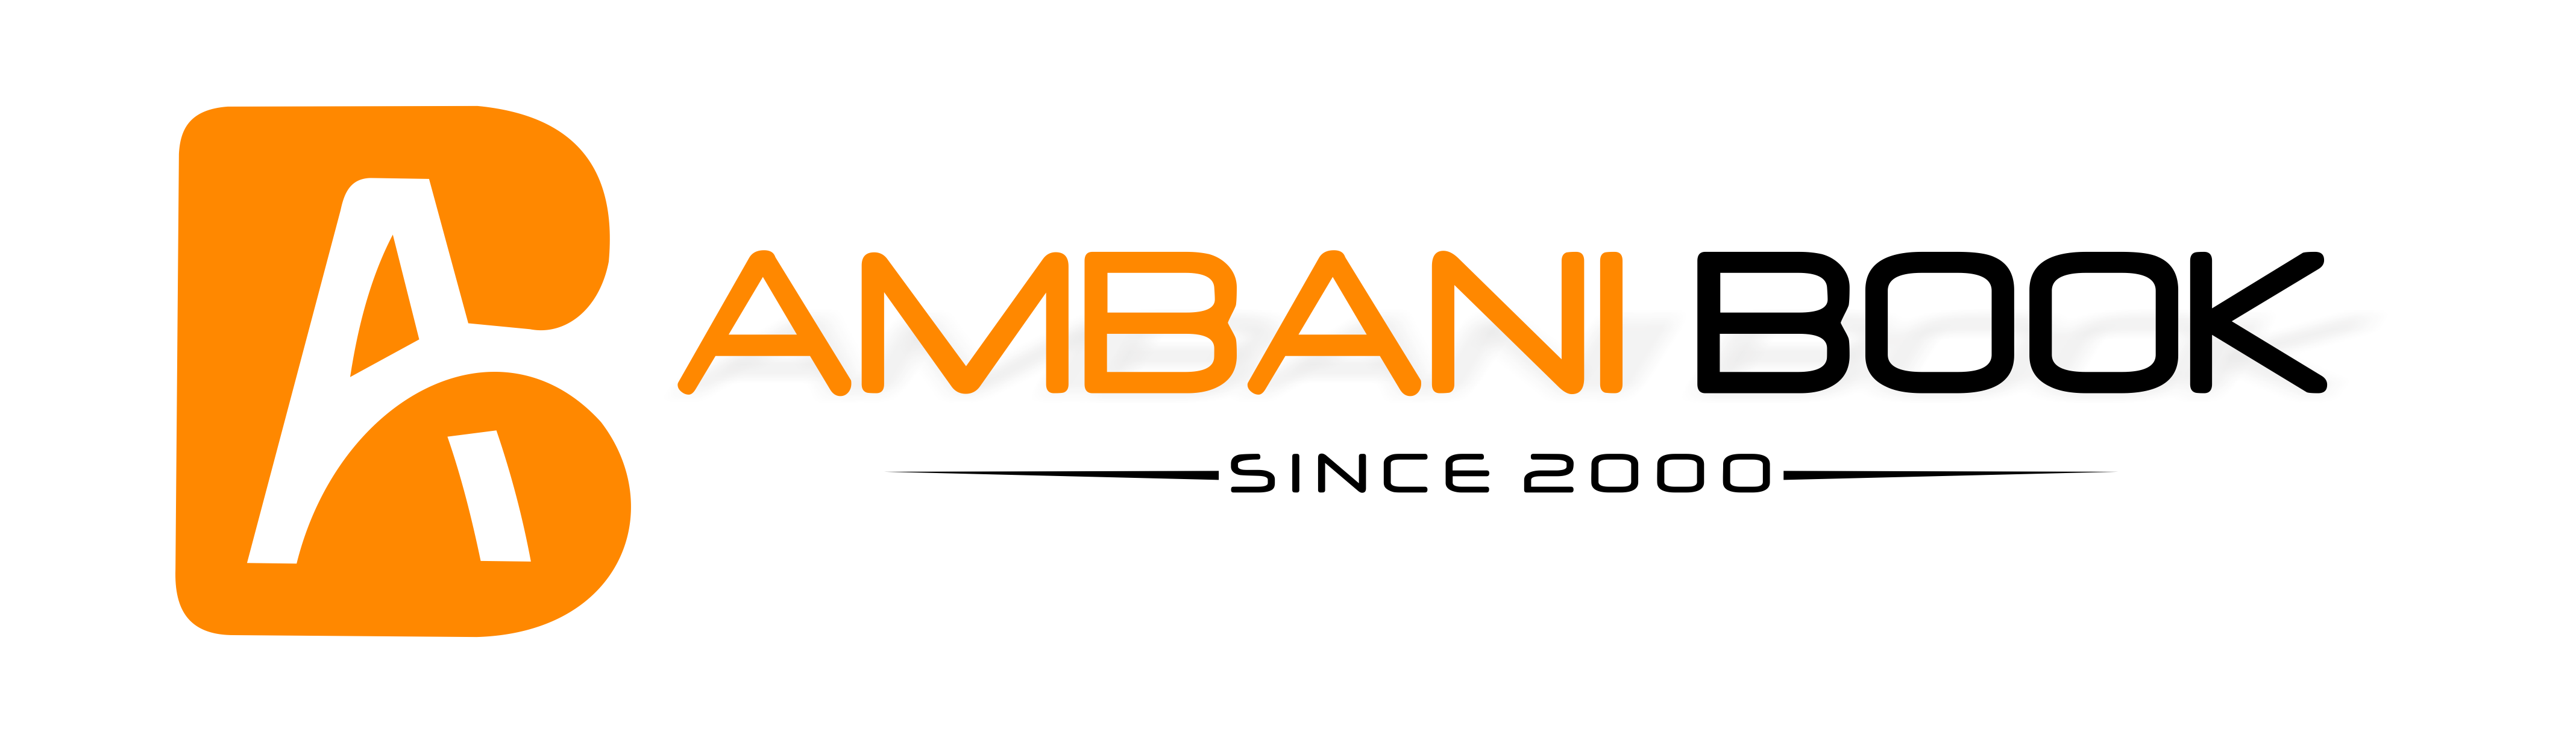 Ambani Book | Online Cricket Betting Exchange ID Provider